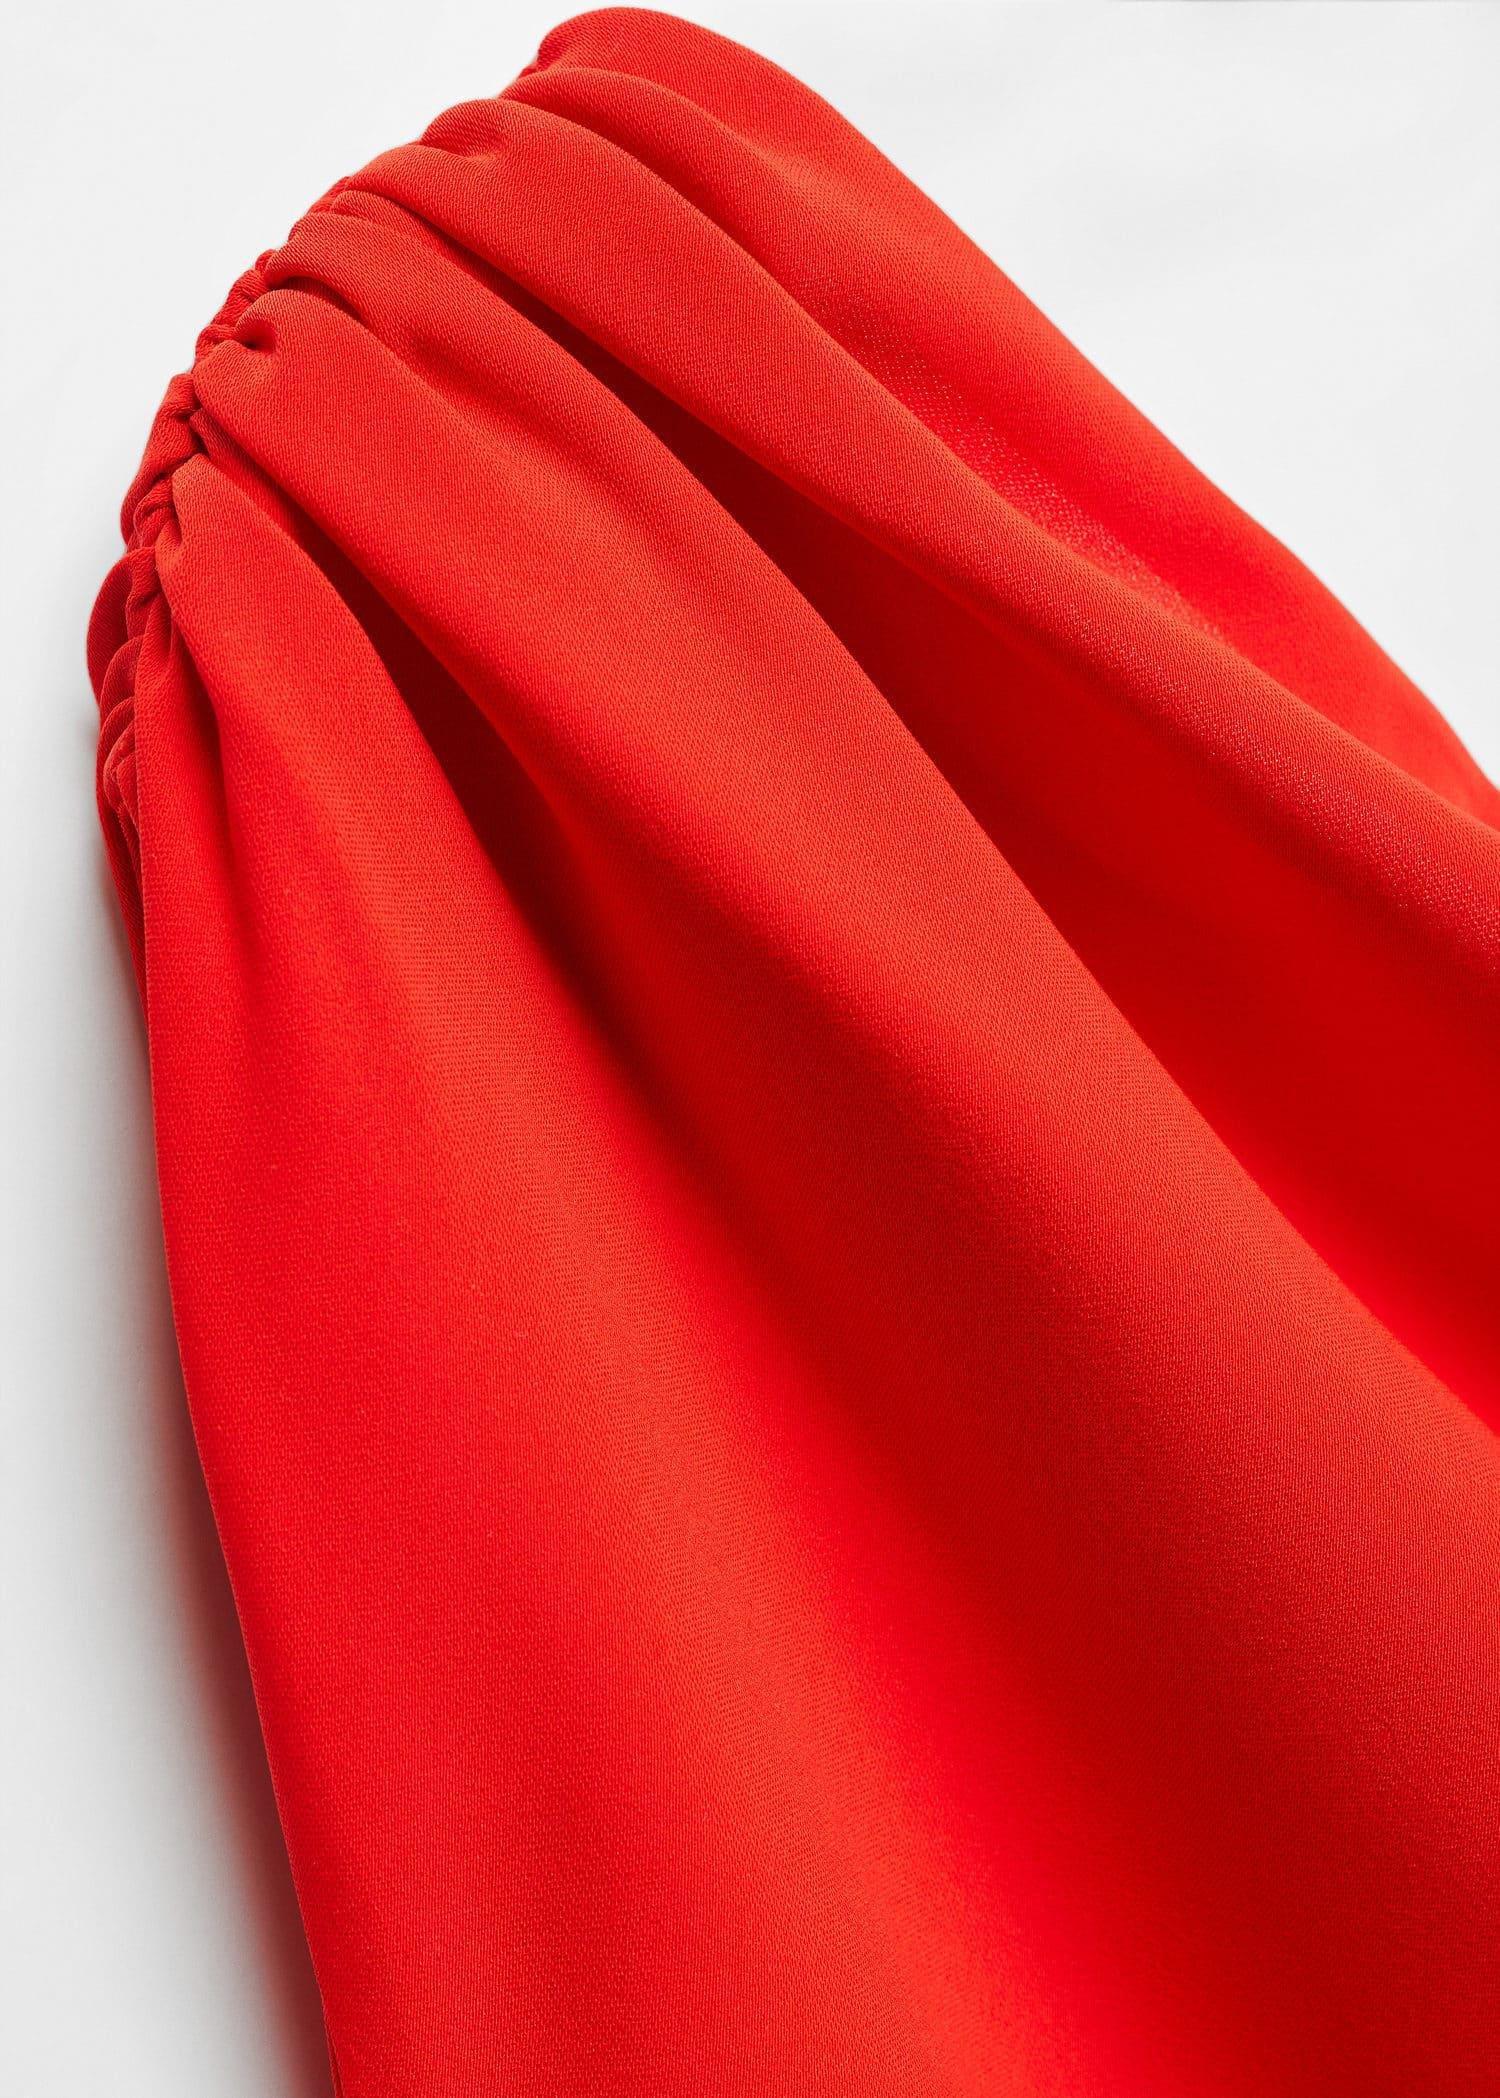 Mango - Red Asymmetrical Dress With Side Slit